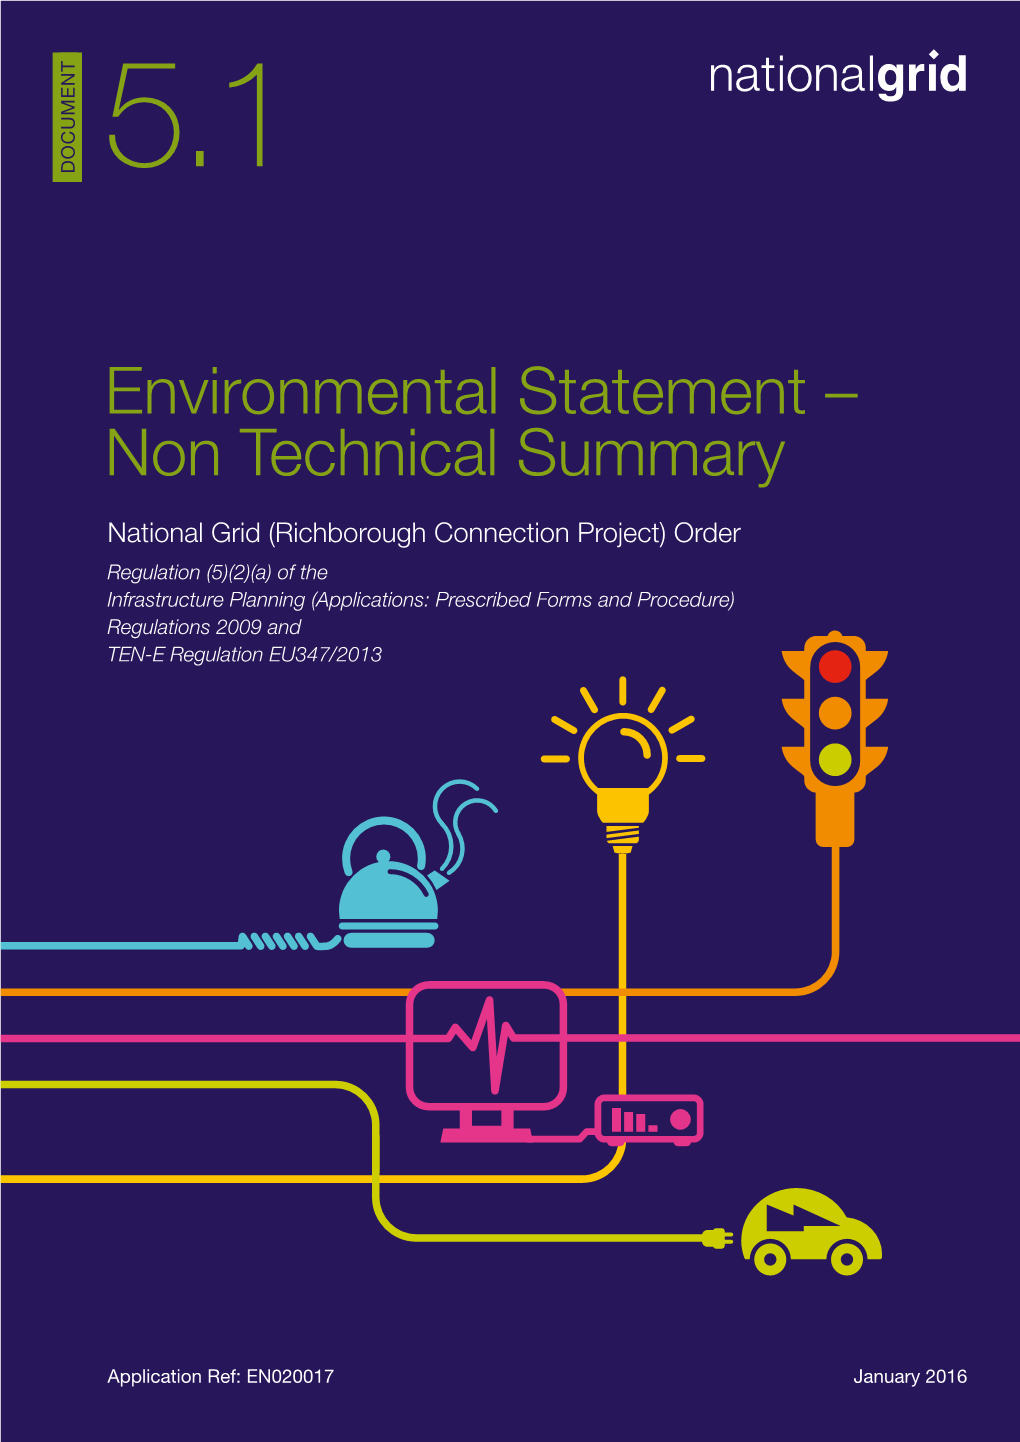 5.1 Environmental Statement – Non-Technical Summary